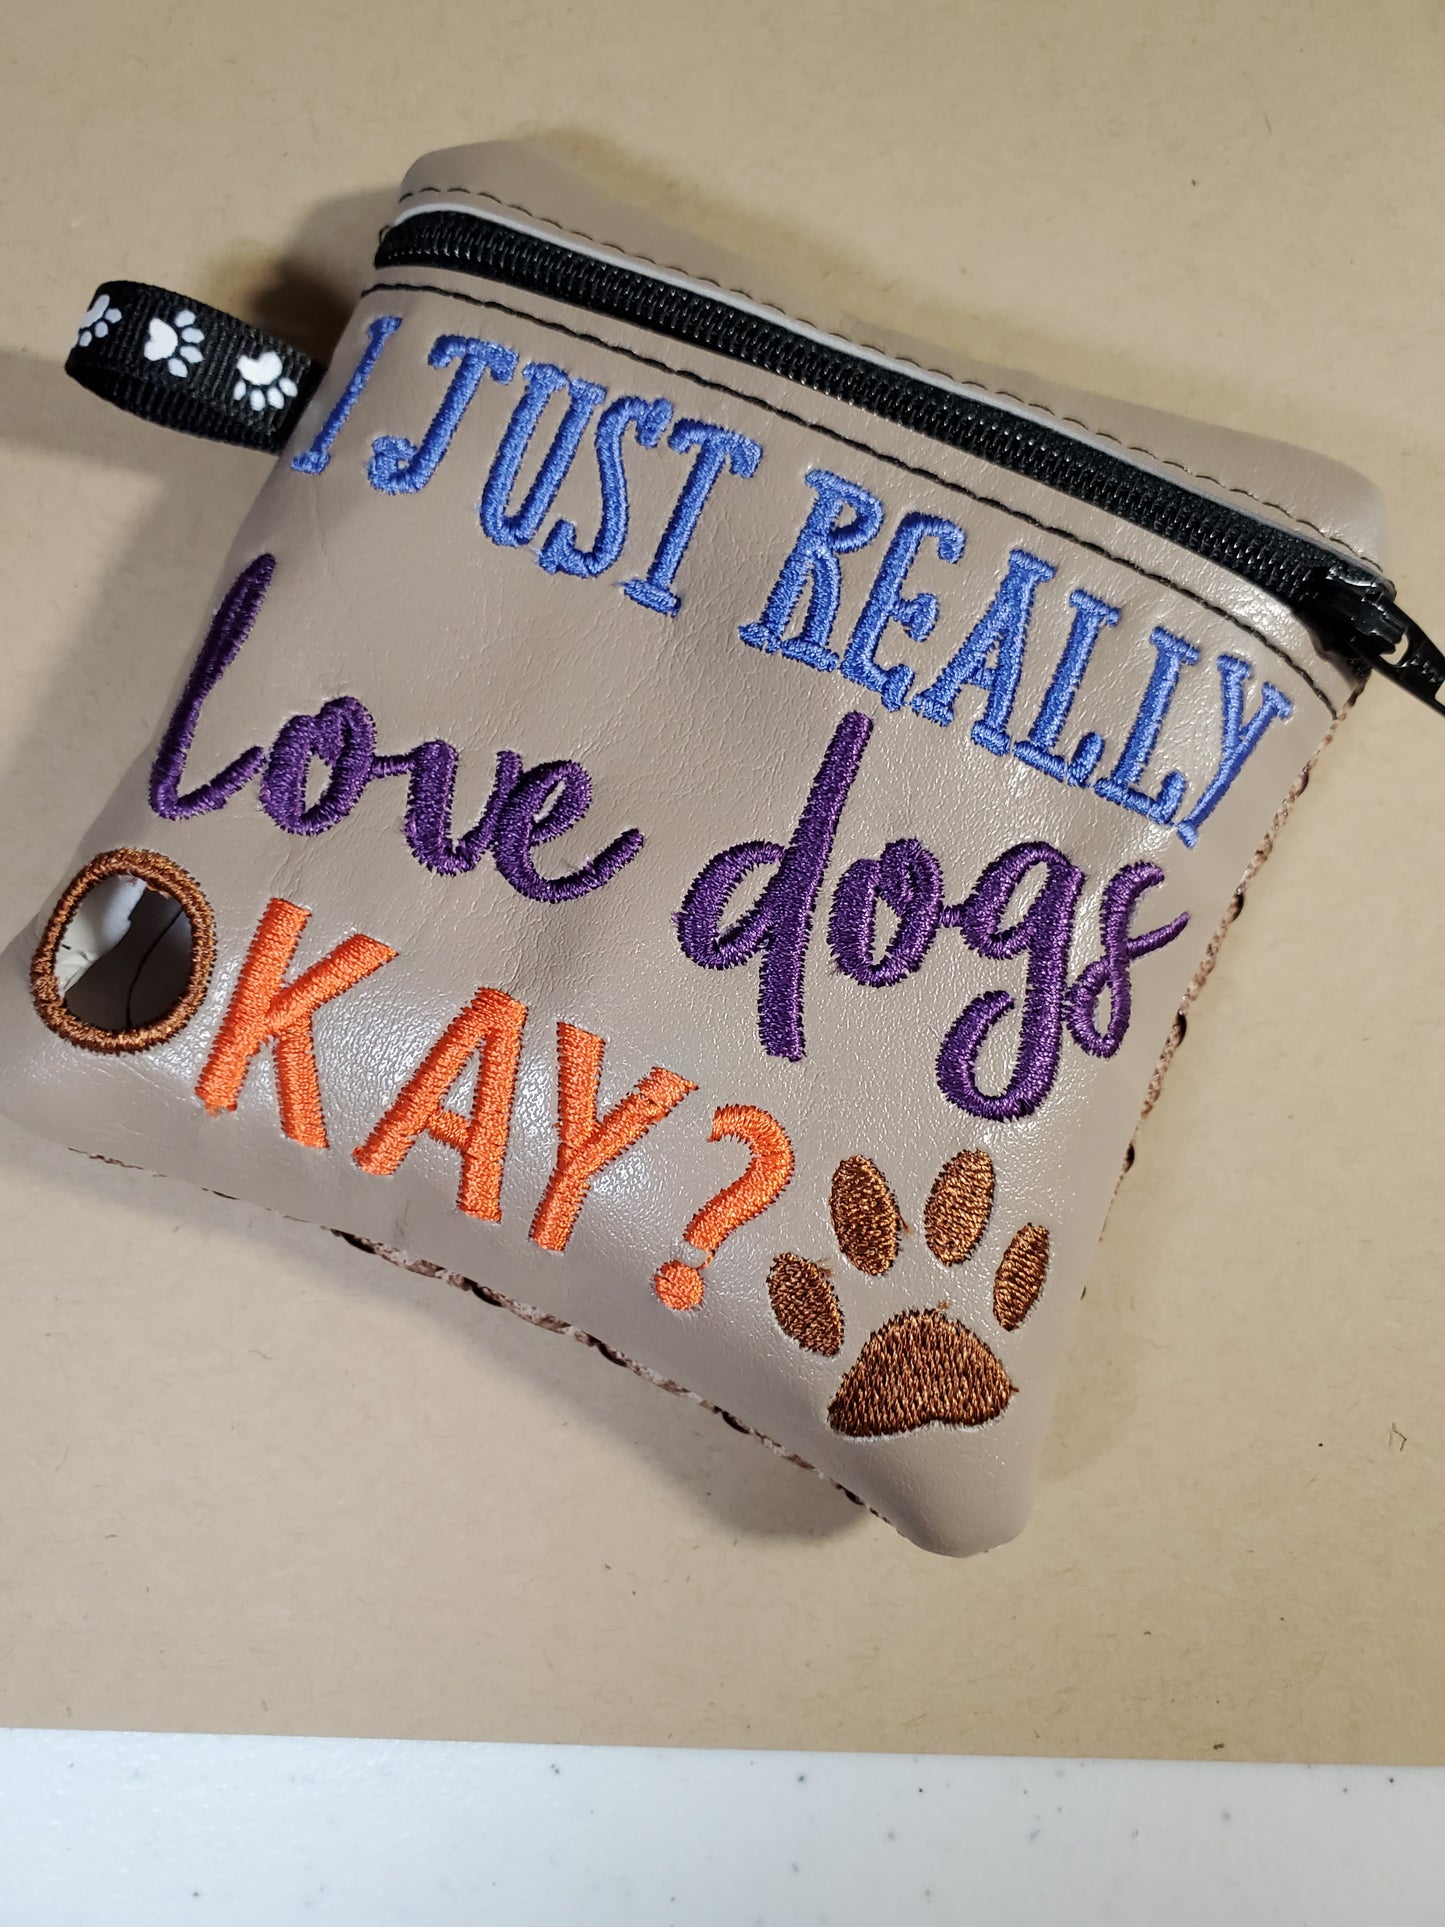 "I just really love dogs okay?" - Dog Poo bag holder - Love Dogs